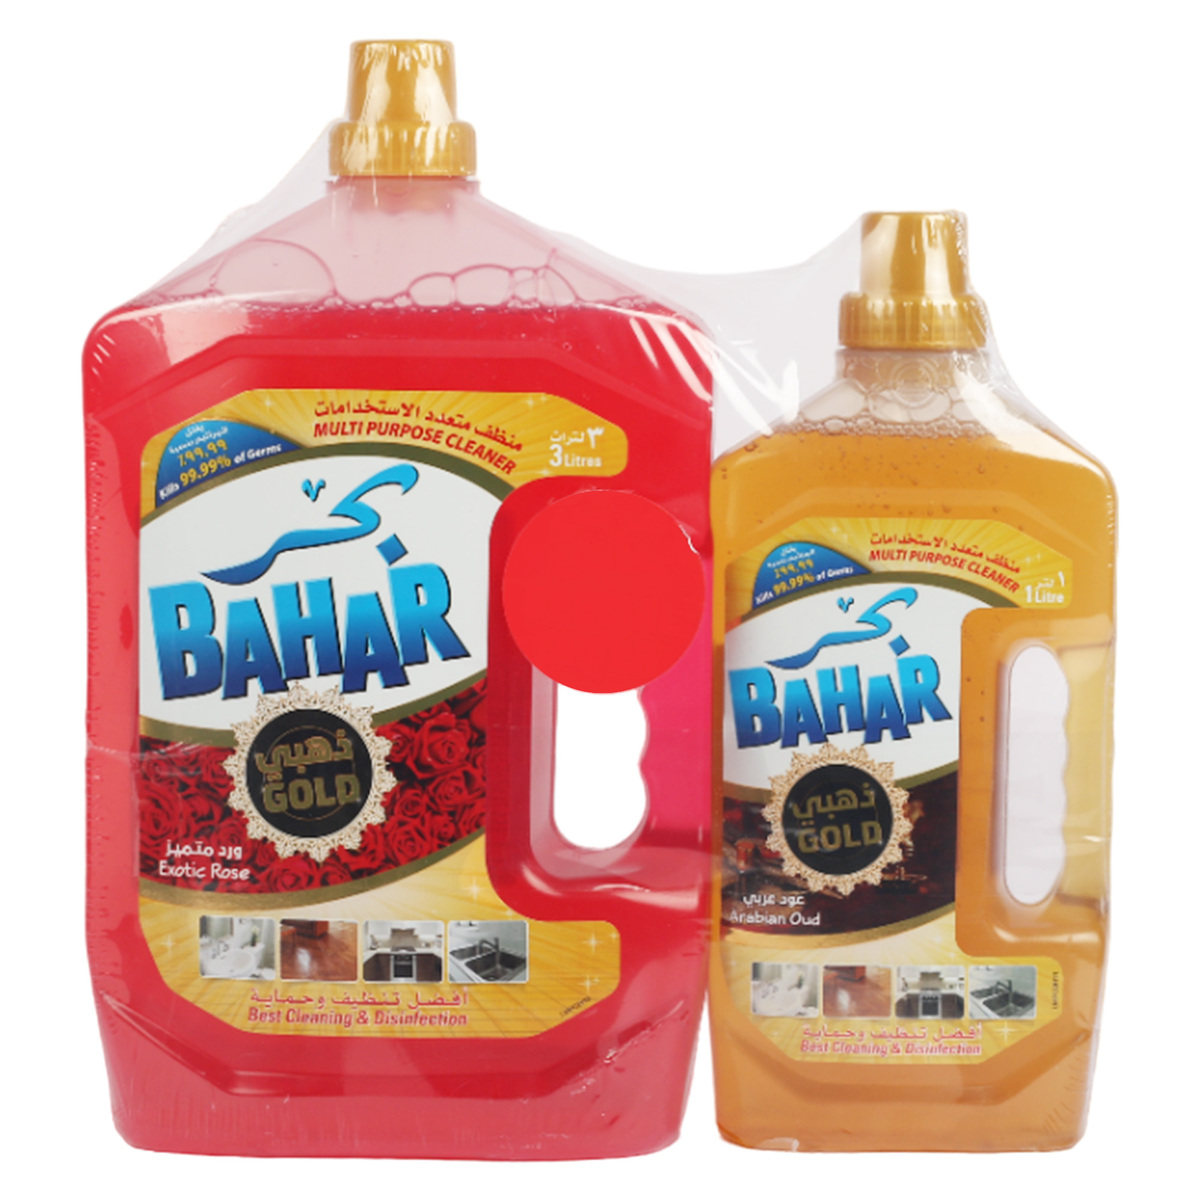 Bahar Gold Multi Purpose Cleaner Exotic Rose 3 Litres + 1 Litre